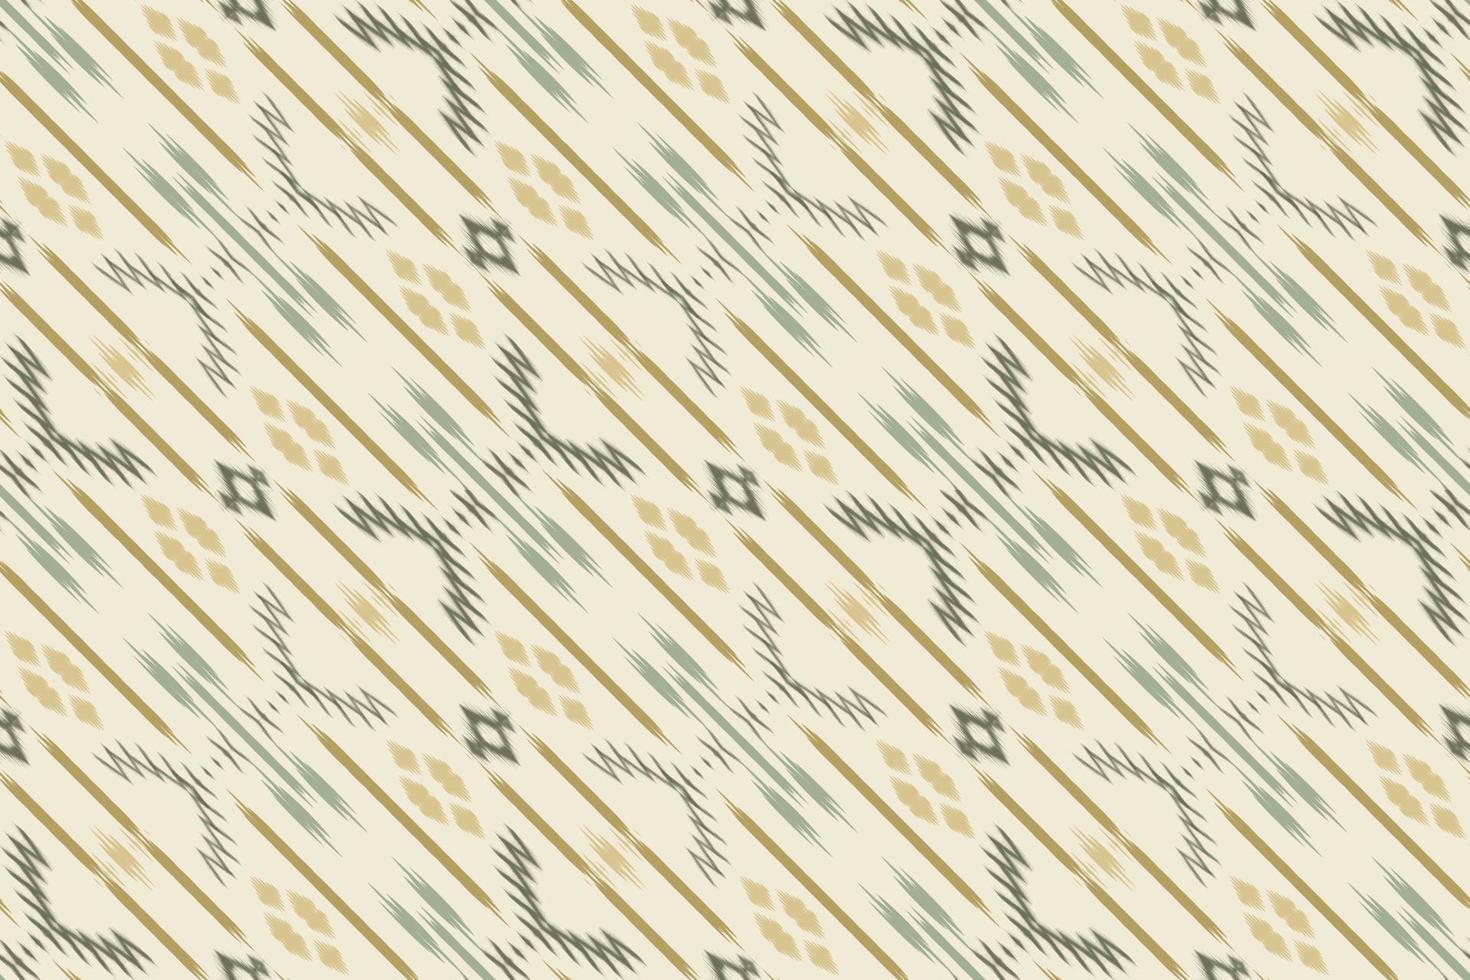 textil batik ikkat o ikat damasco patrón sin costuras diseño vectorial digital para imprimir saree kurti borneo borde de tela símbolos de pincel muestras de algodón vector